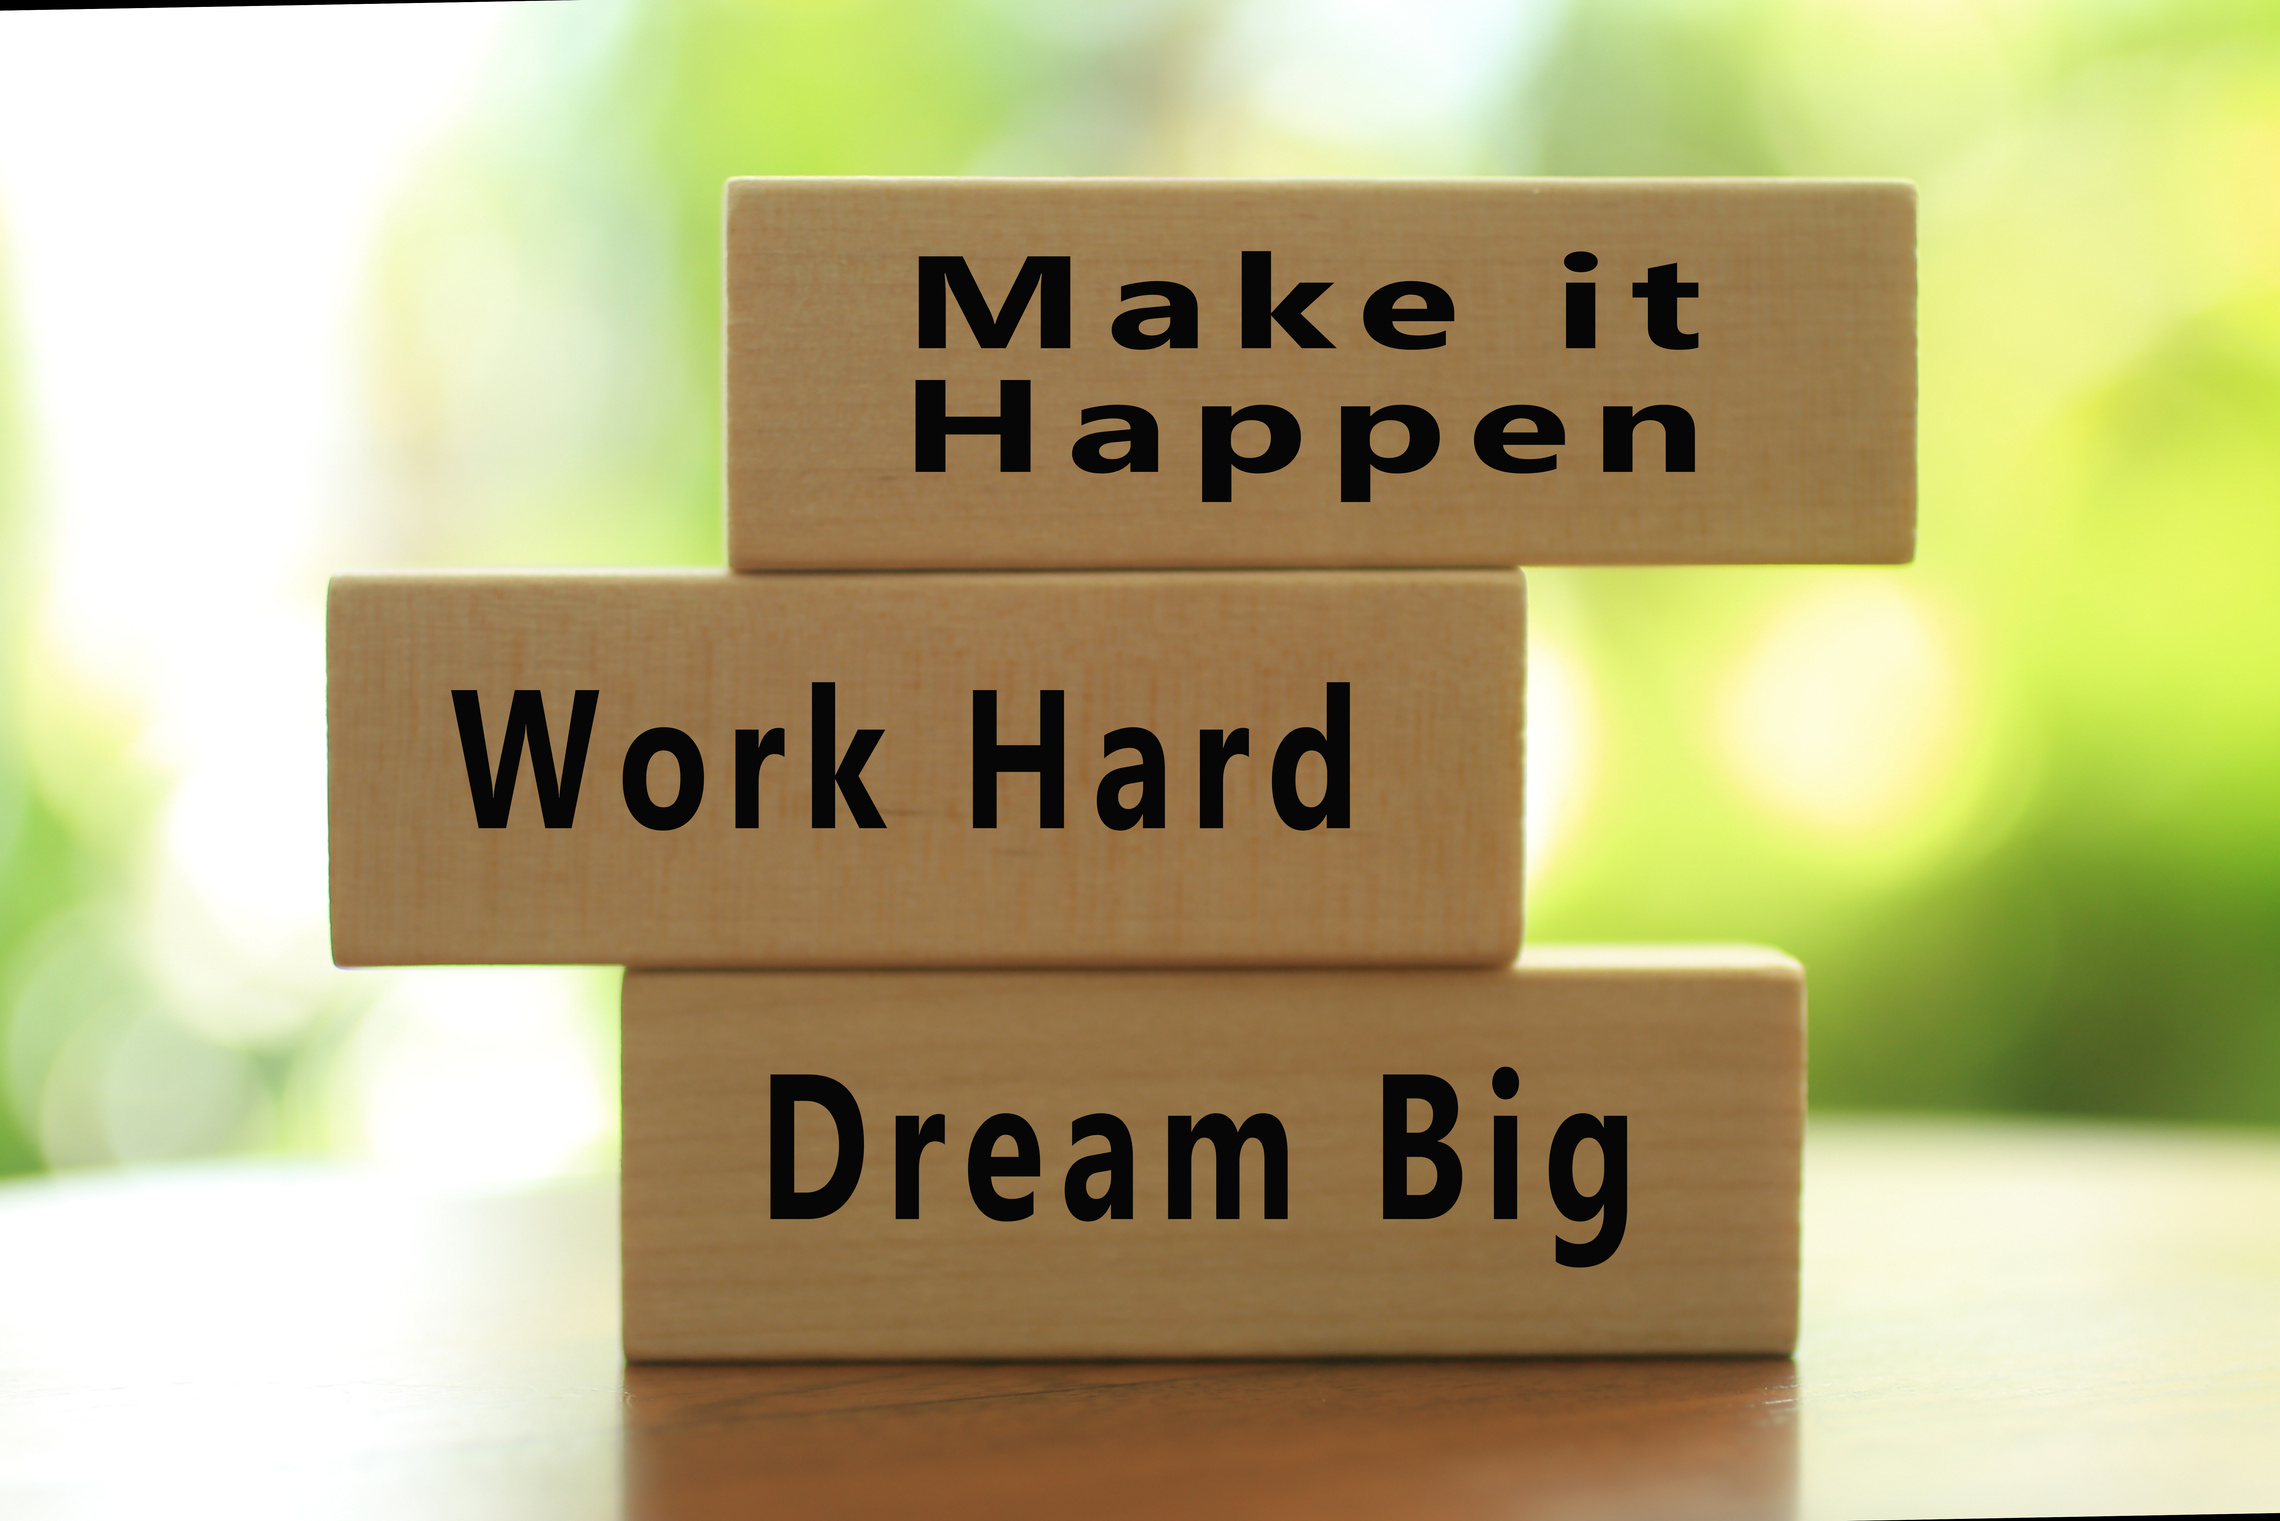 Dream big. Work hard. Make it happen.